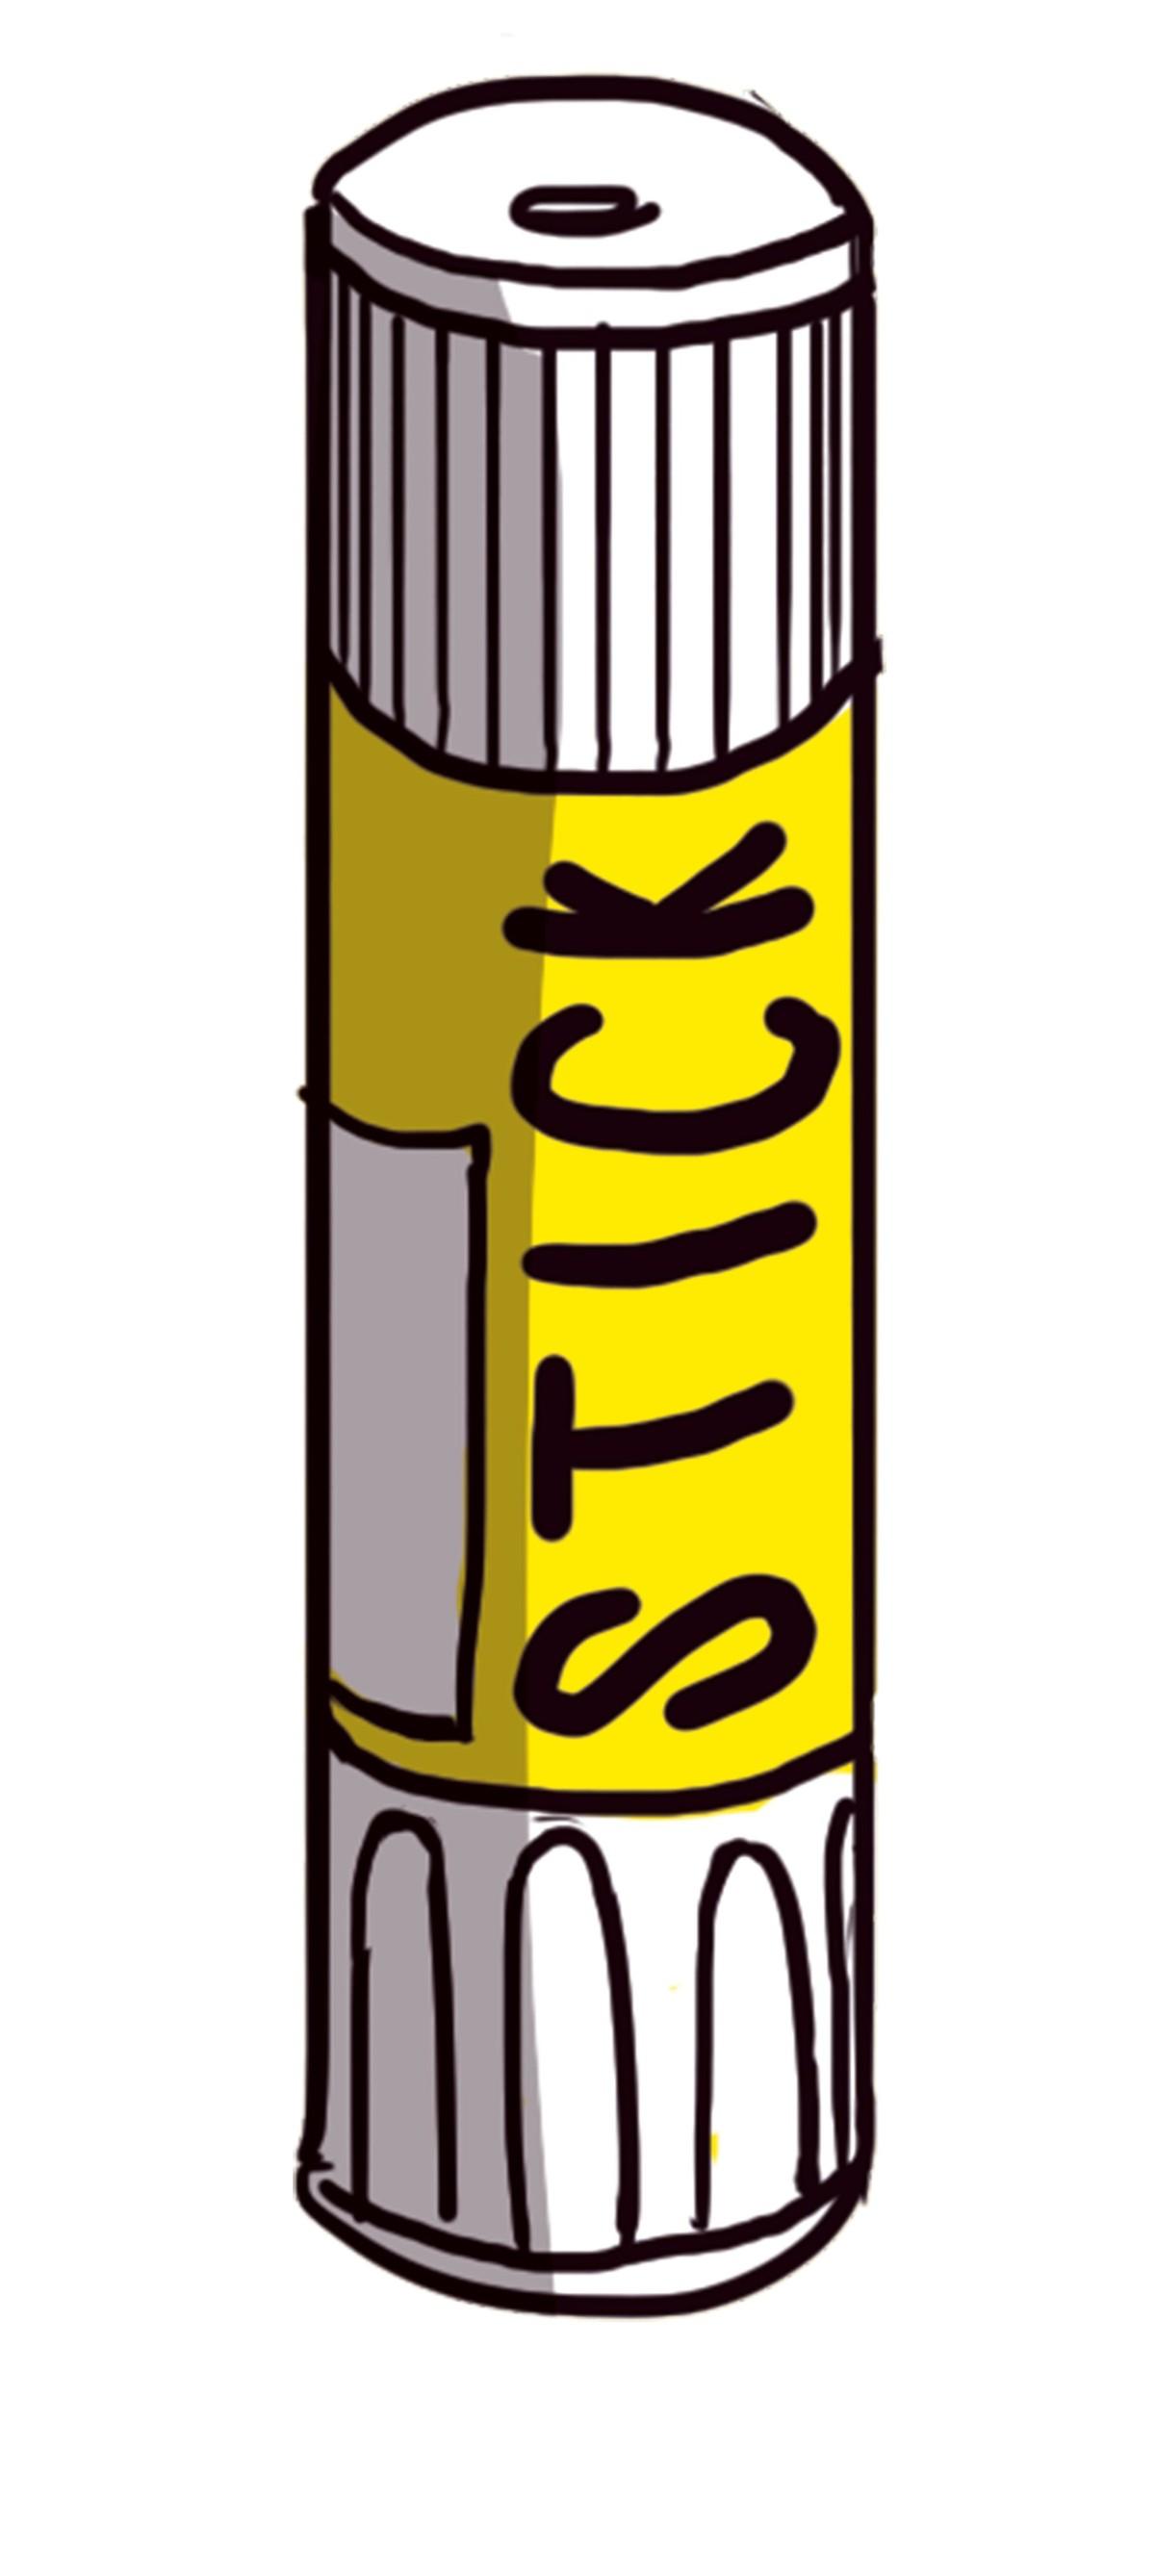 A yellow glue stick